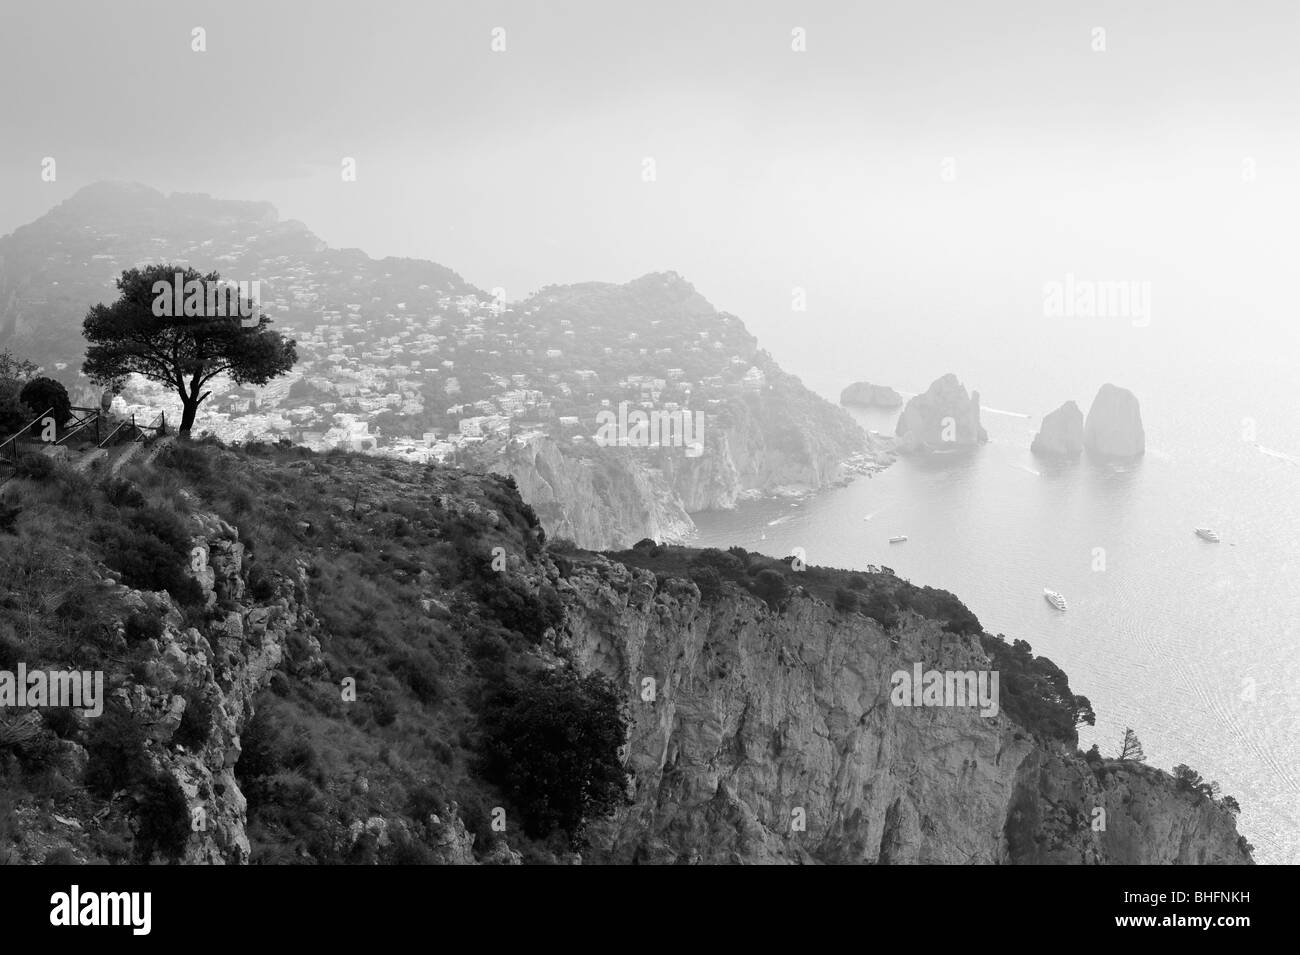 Dramatic View of Capri from Monte Solaro, Island of Capri, Italy Stock Photo